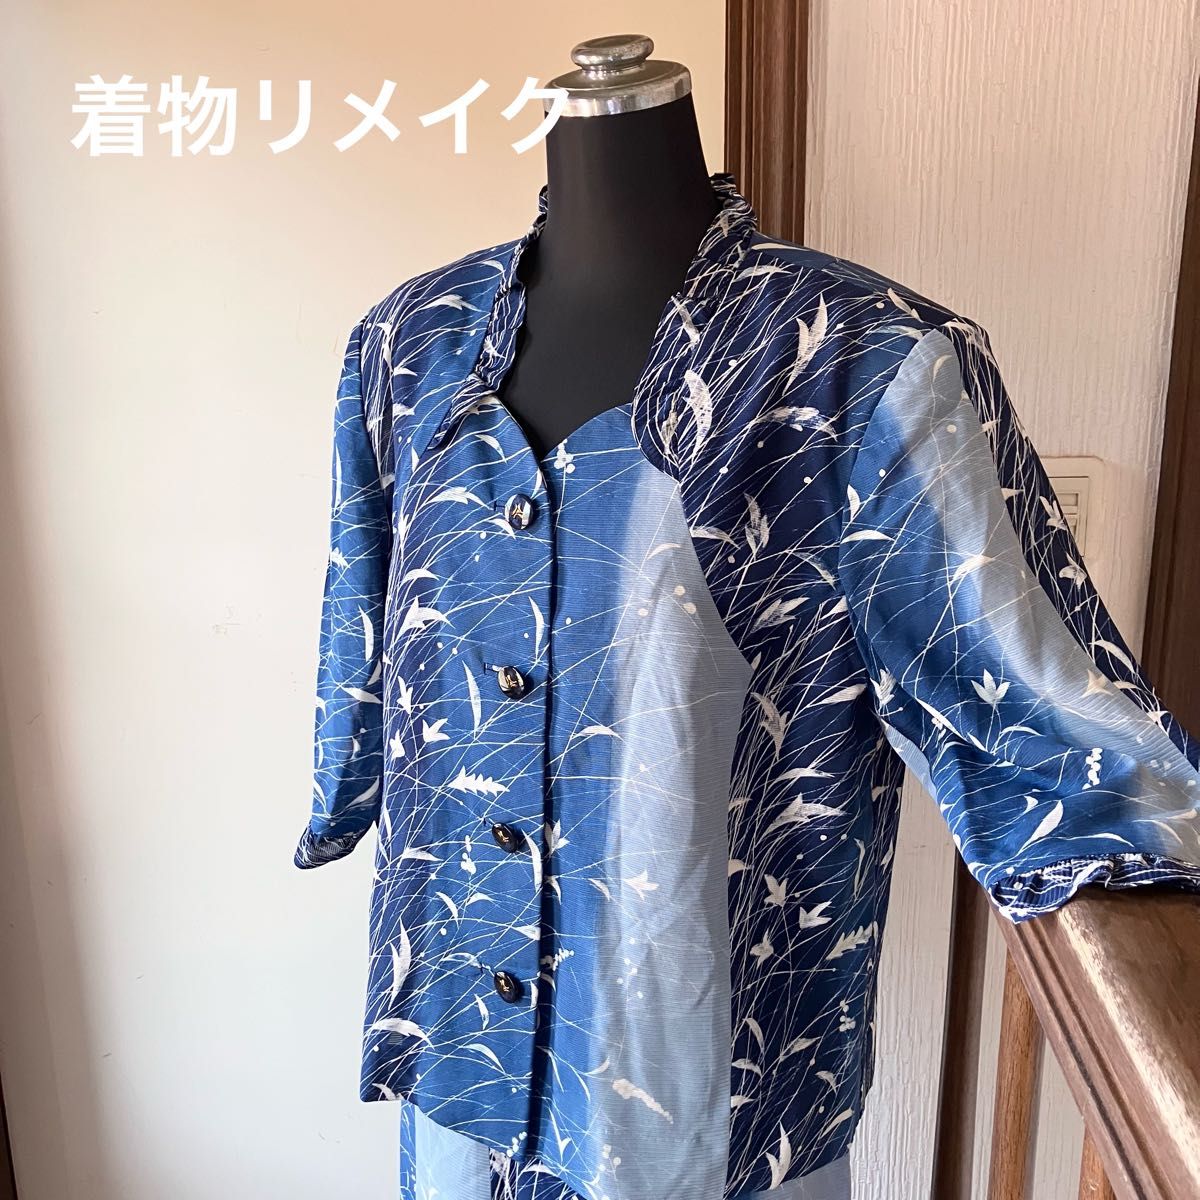 used  着物リメイク  正絹絽着物から作った七分袖ブラウスジャケット